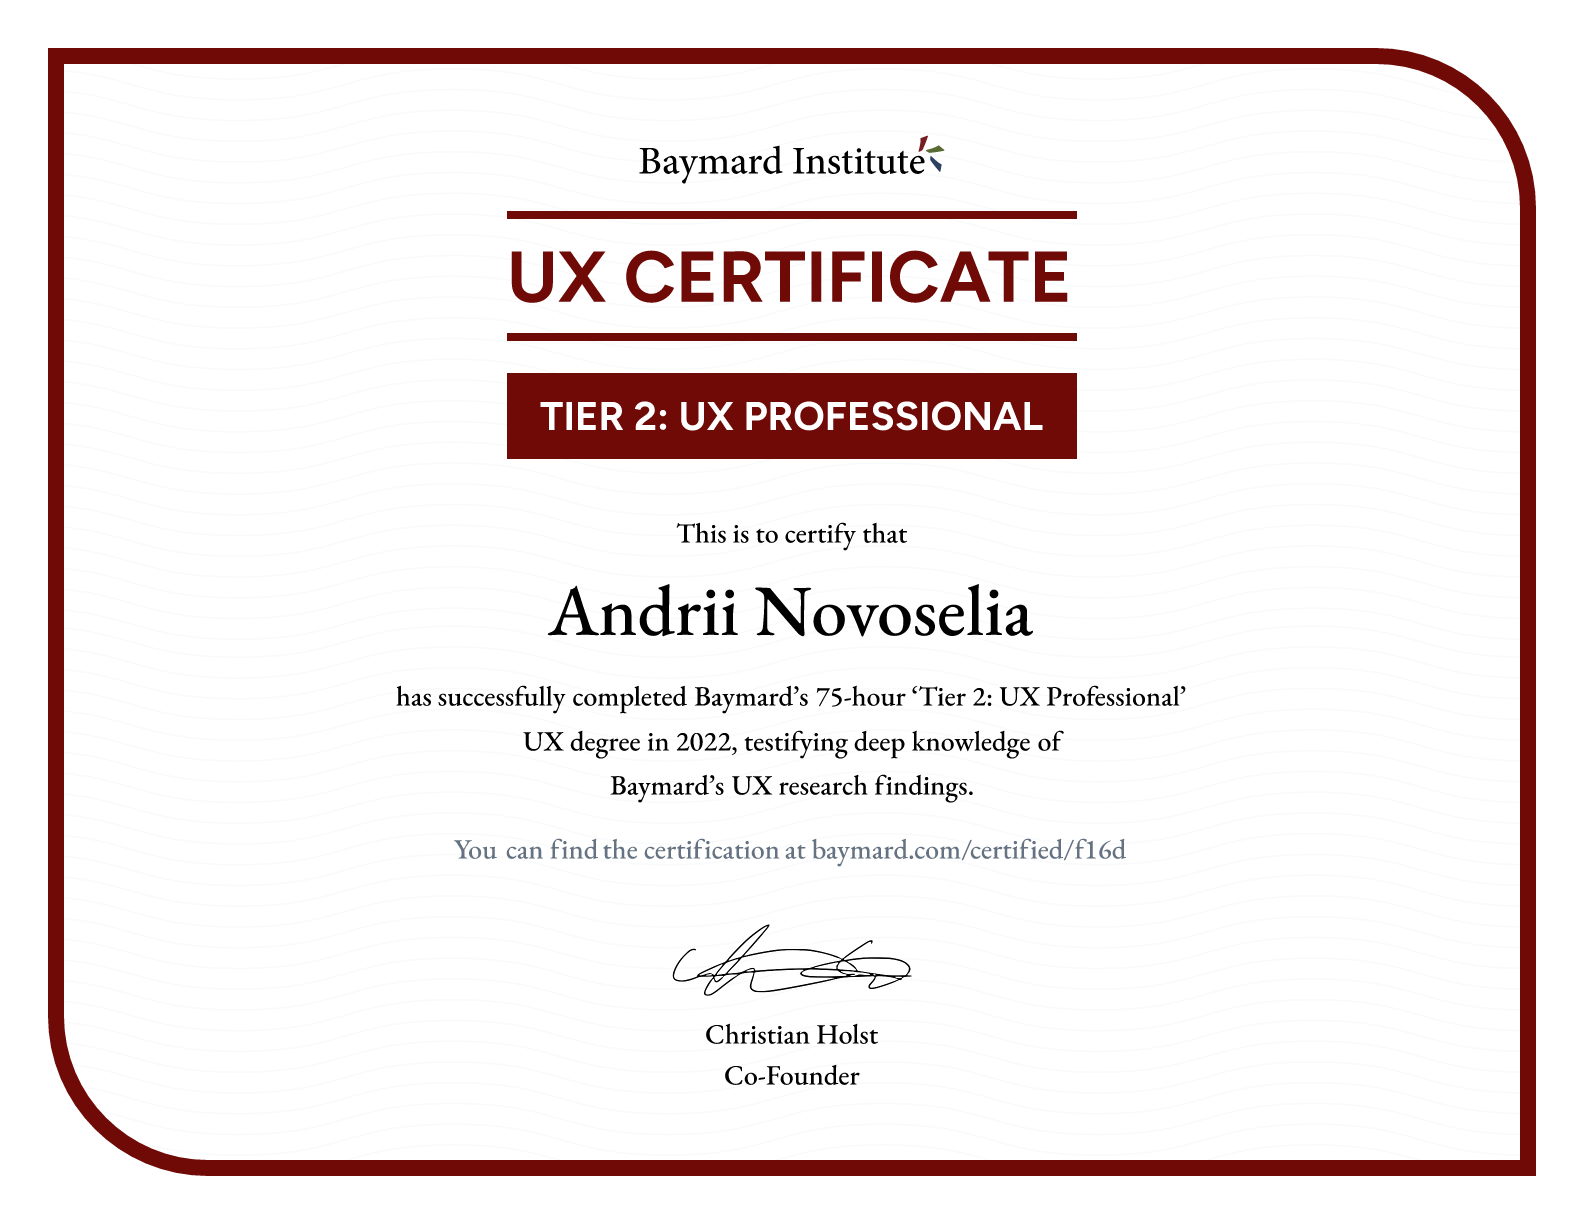 Andrii Novoselia’s certificate